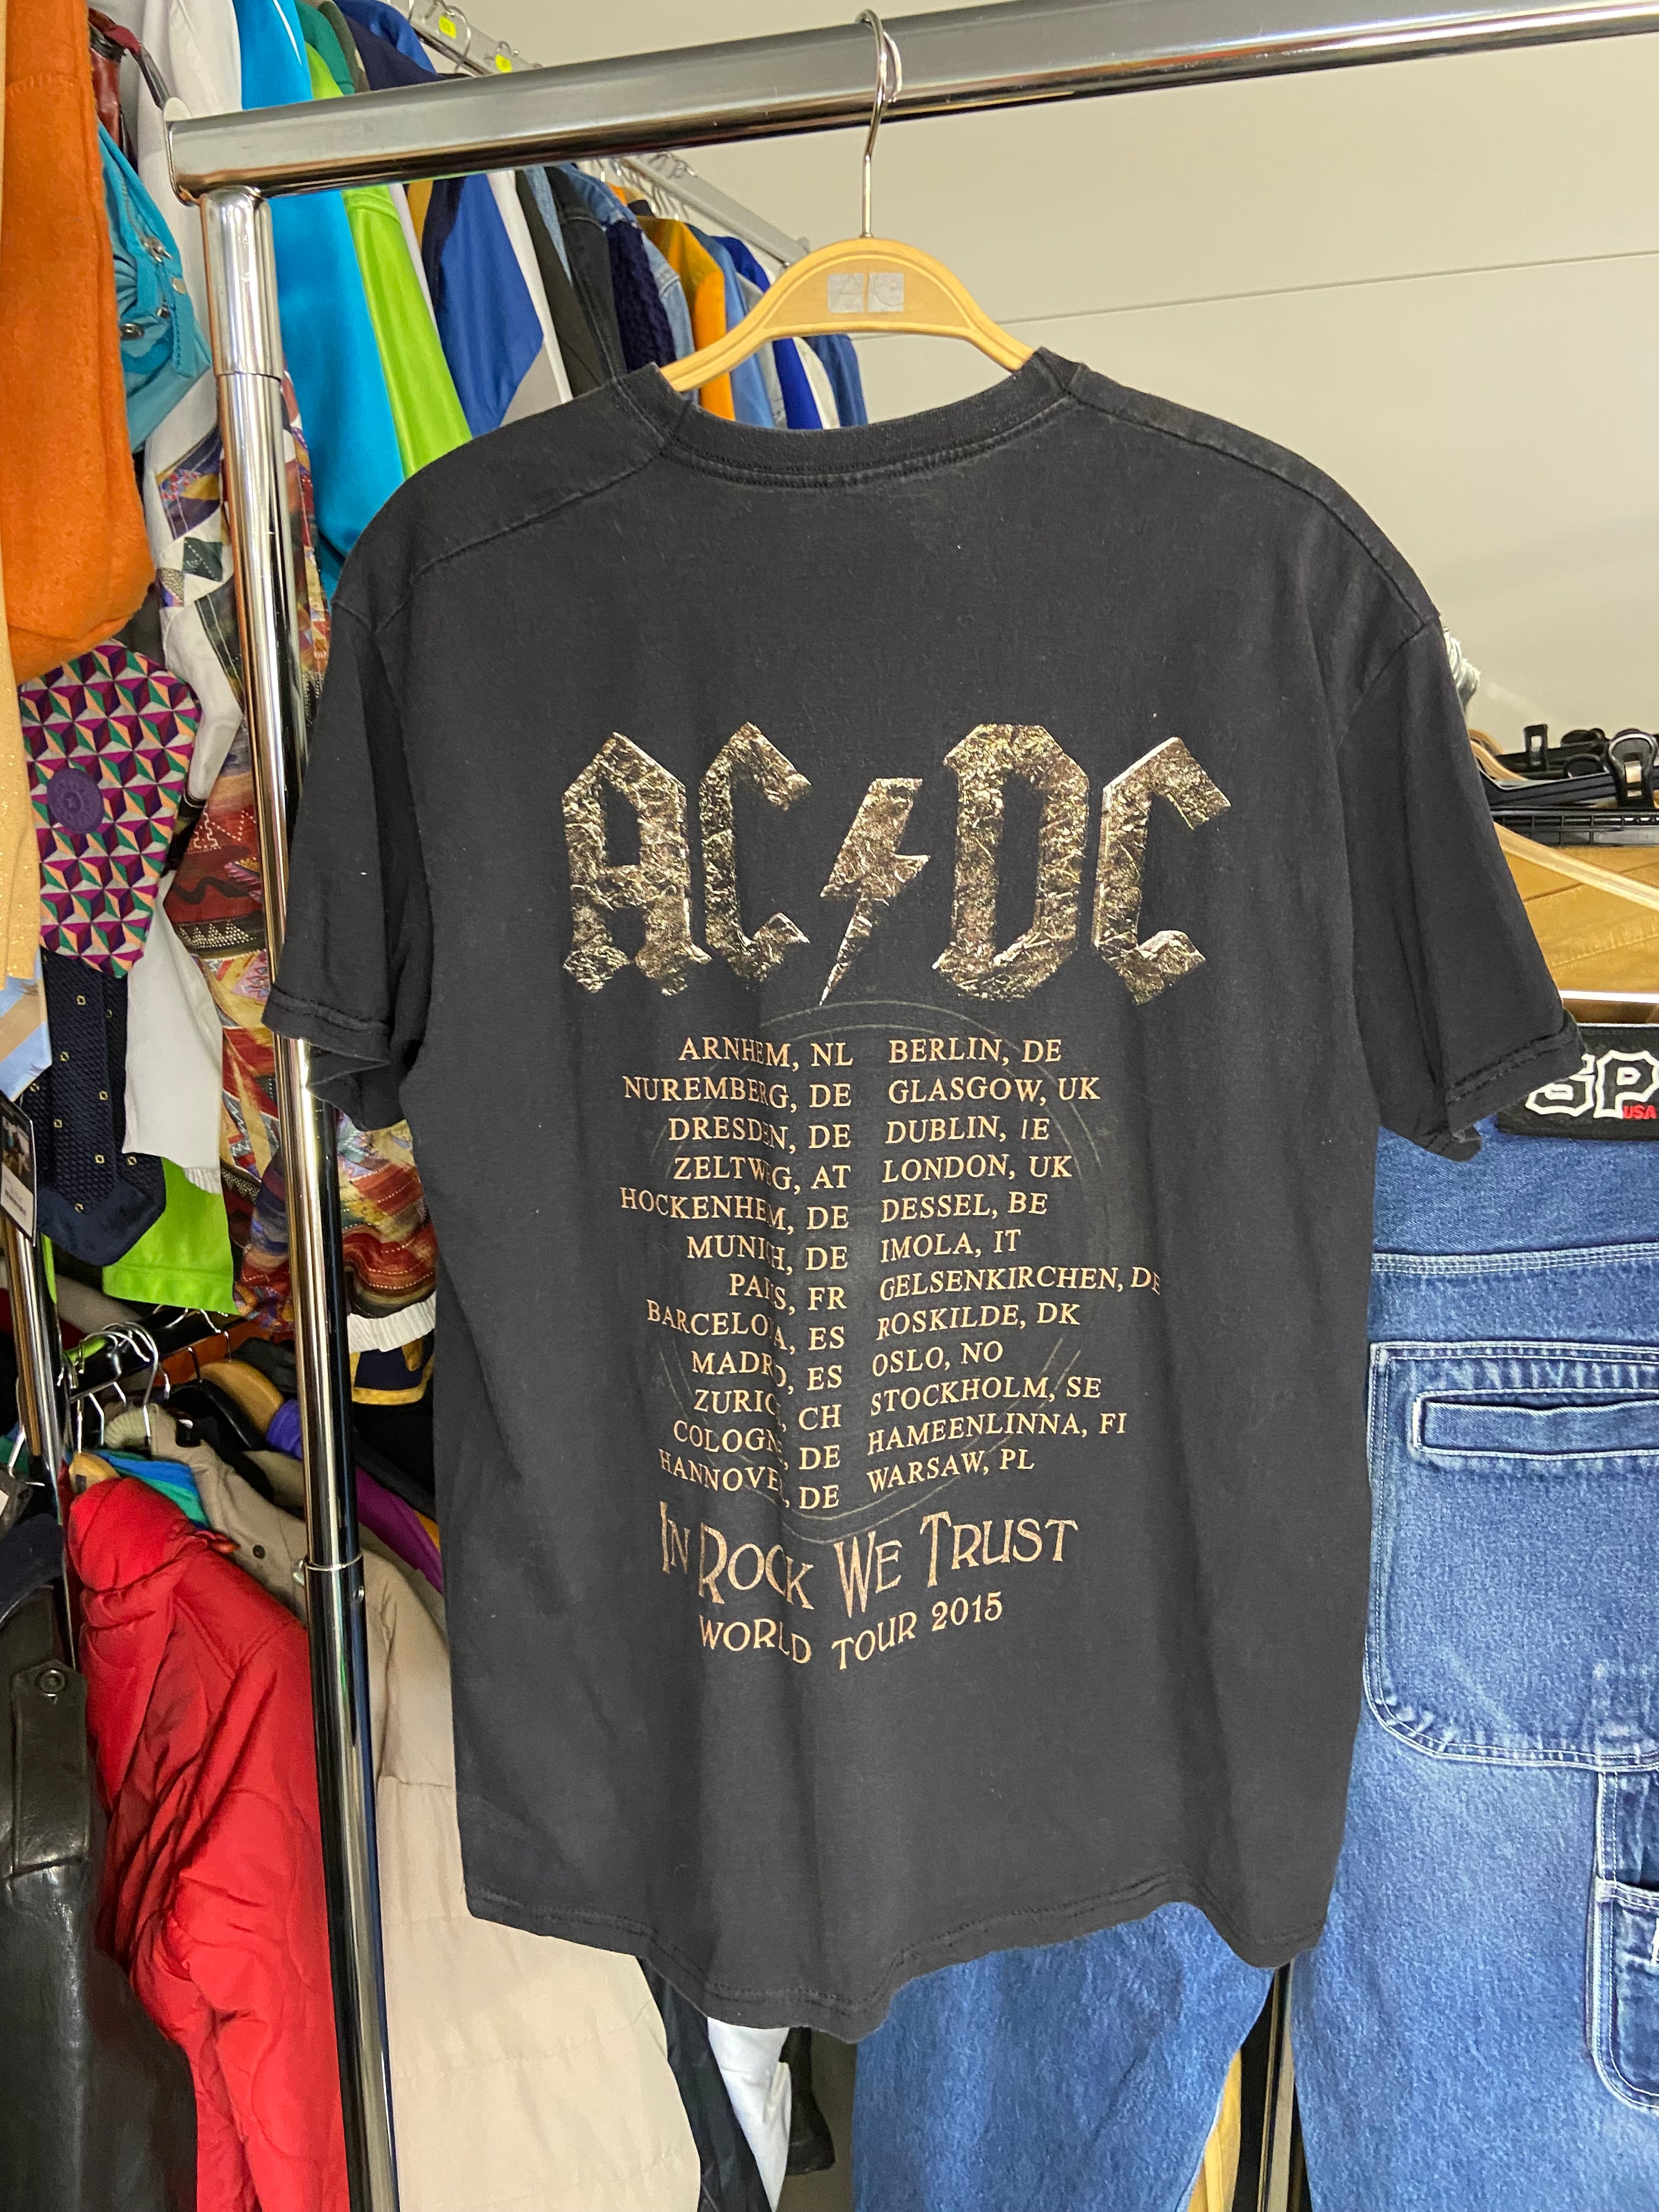 Vintage ACDC Black Mens L T-Shirt Short Sleeve 2015